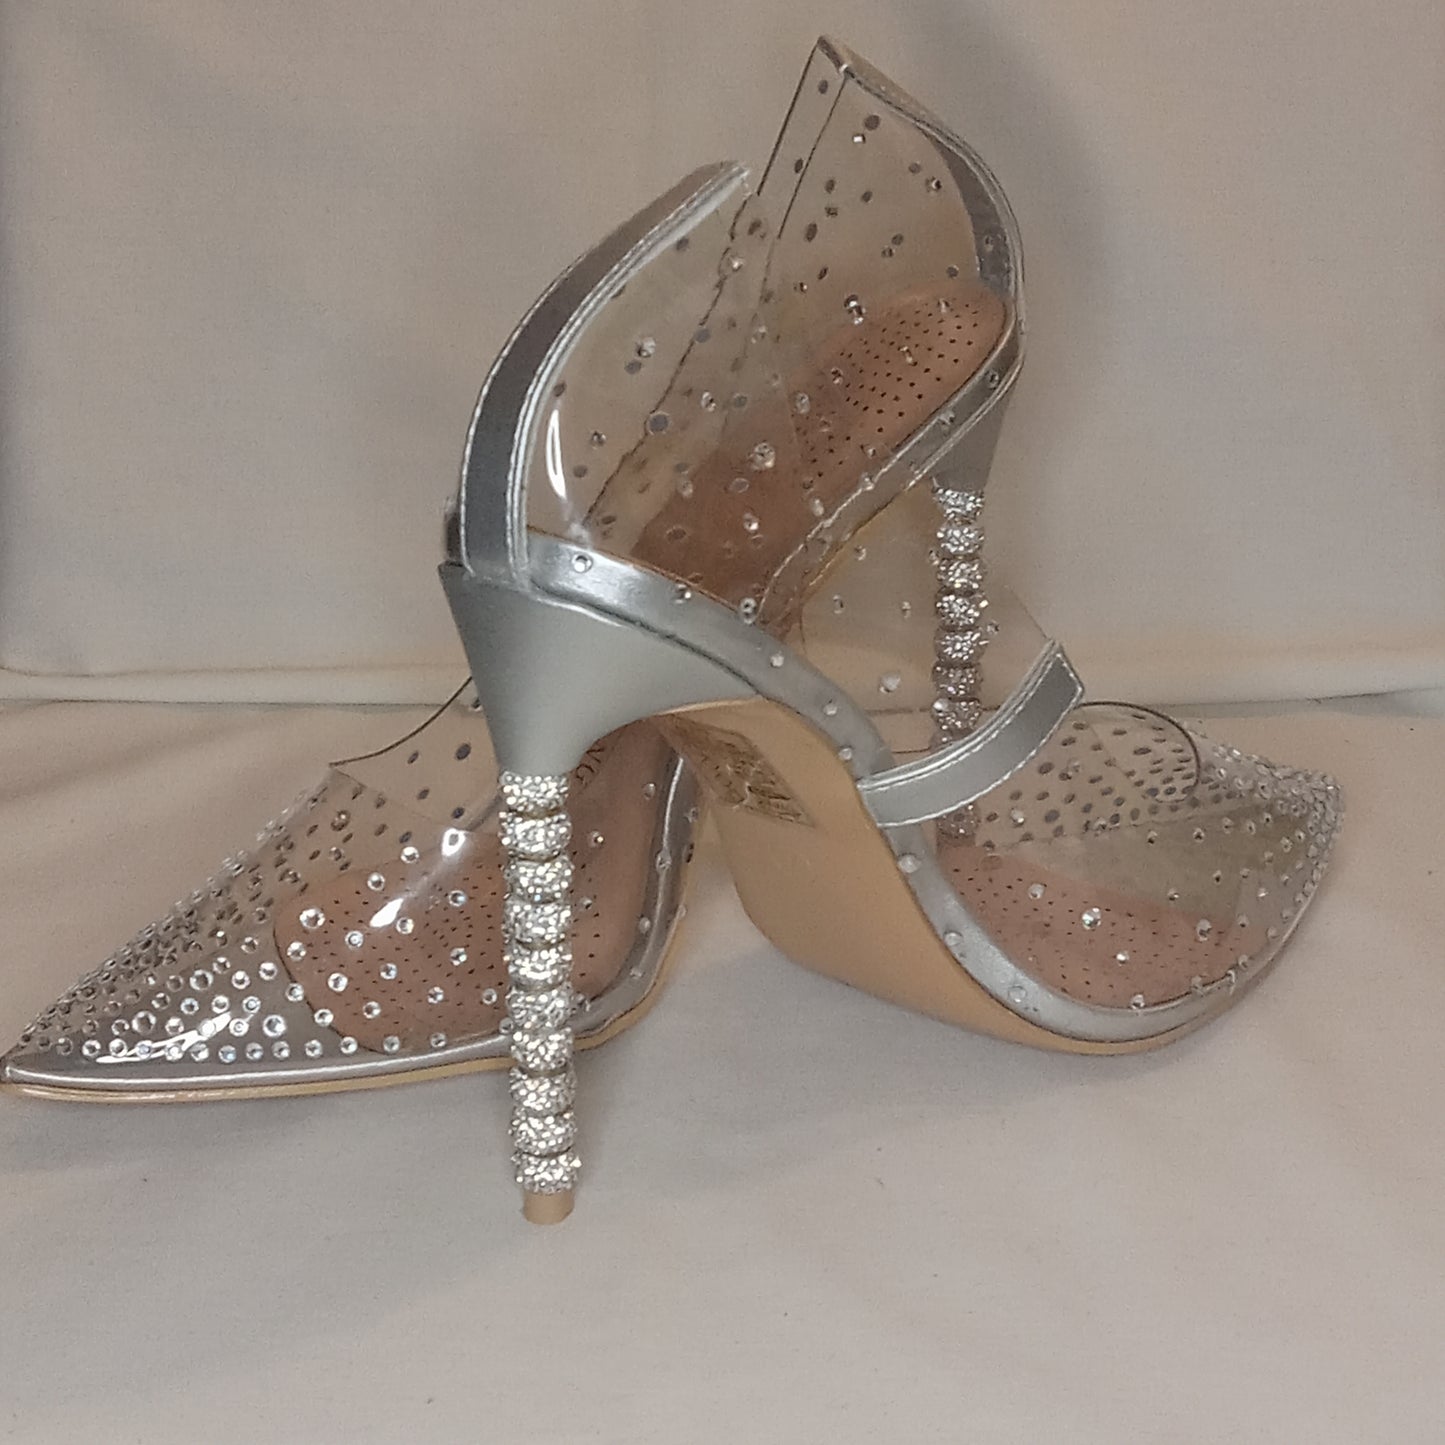 Azalea Wang Clear Rhinestone pump with mega stone heel! Great for Wedding